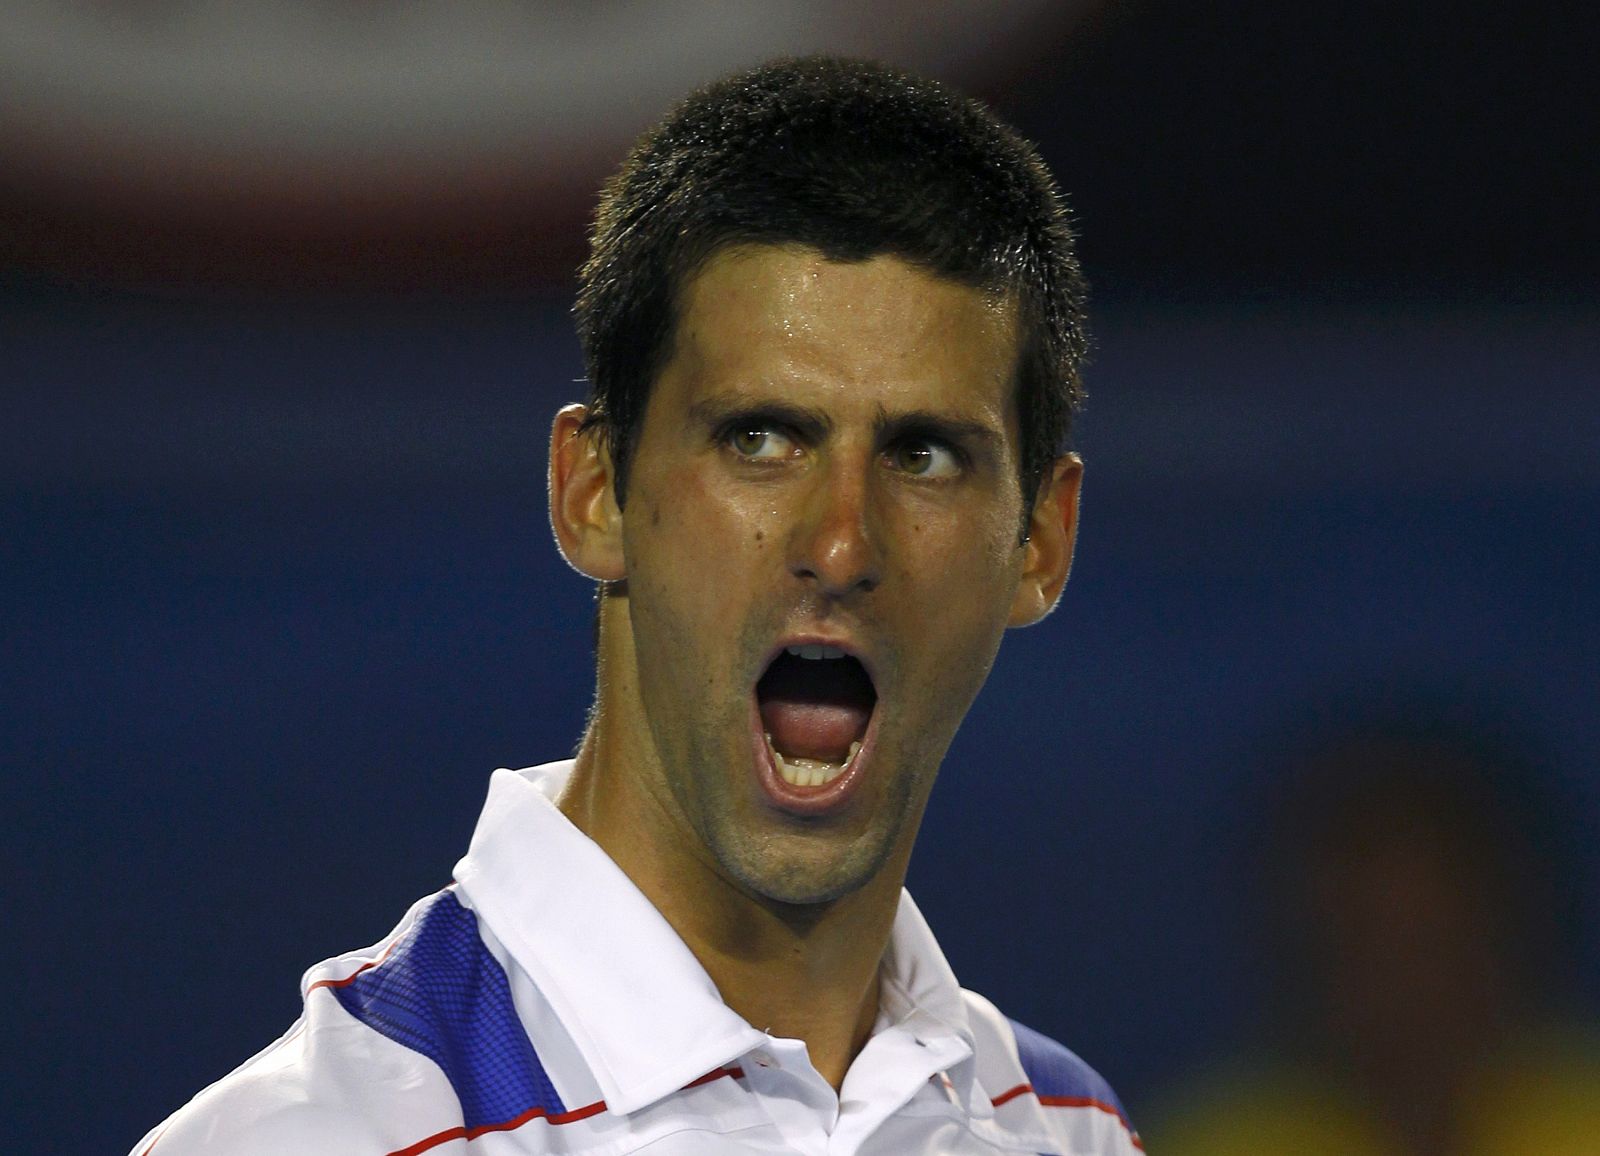 Djokovic celebra su pase a la final del Abierto de Australia 2011 tras ganar a Roger Federer.